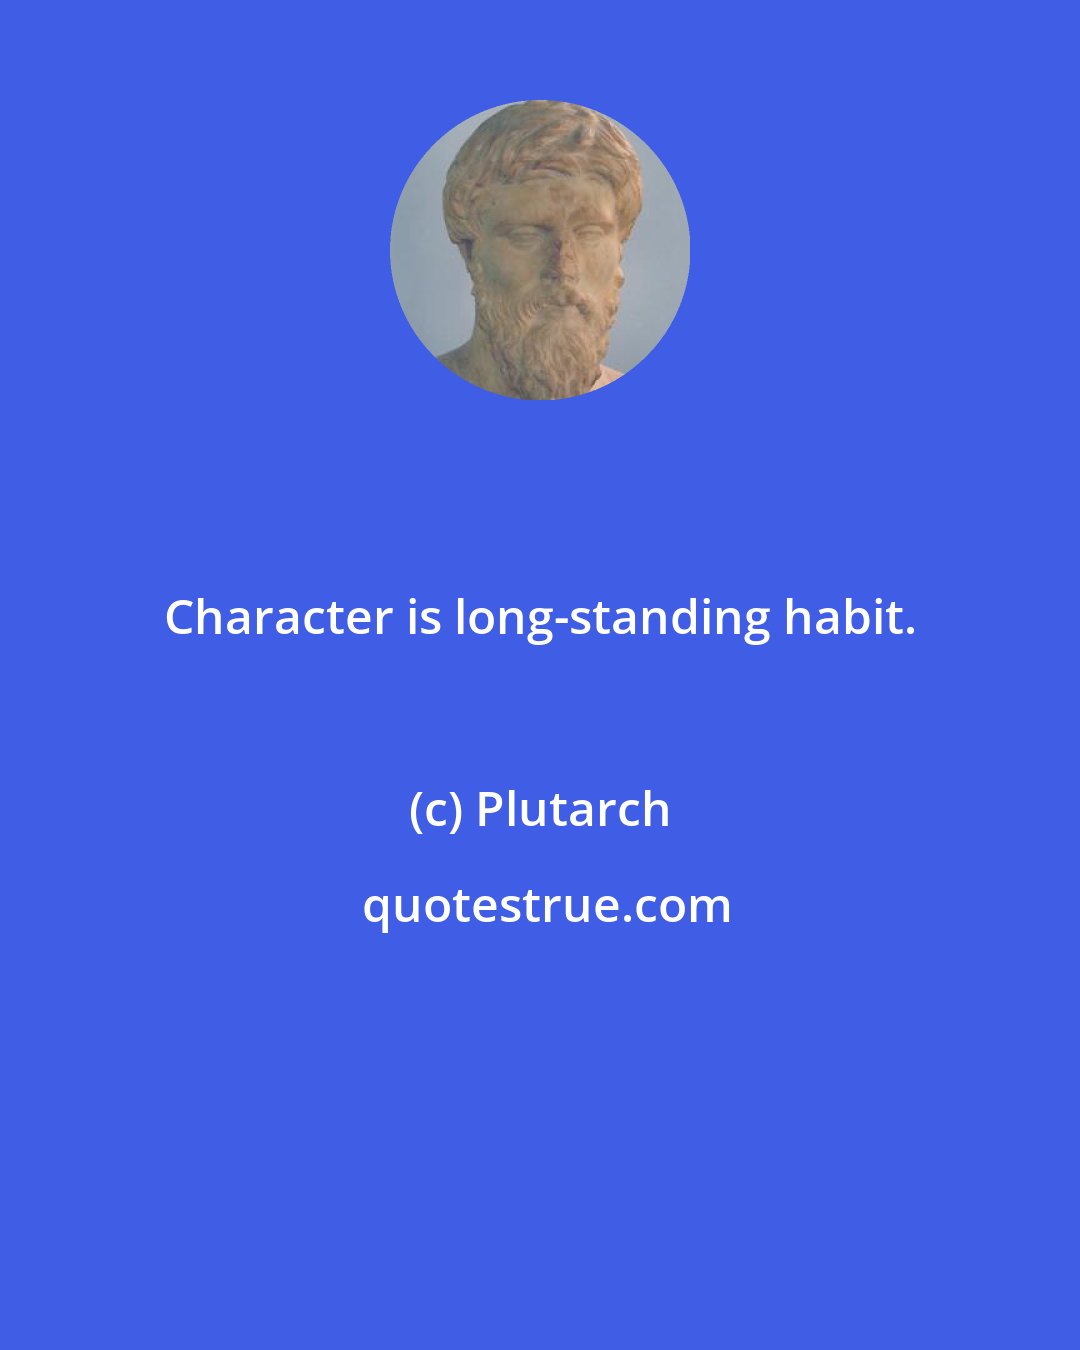 Plutarch: Character is long-standing habit.